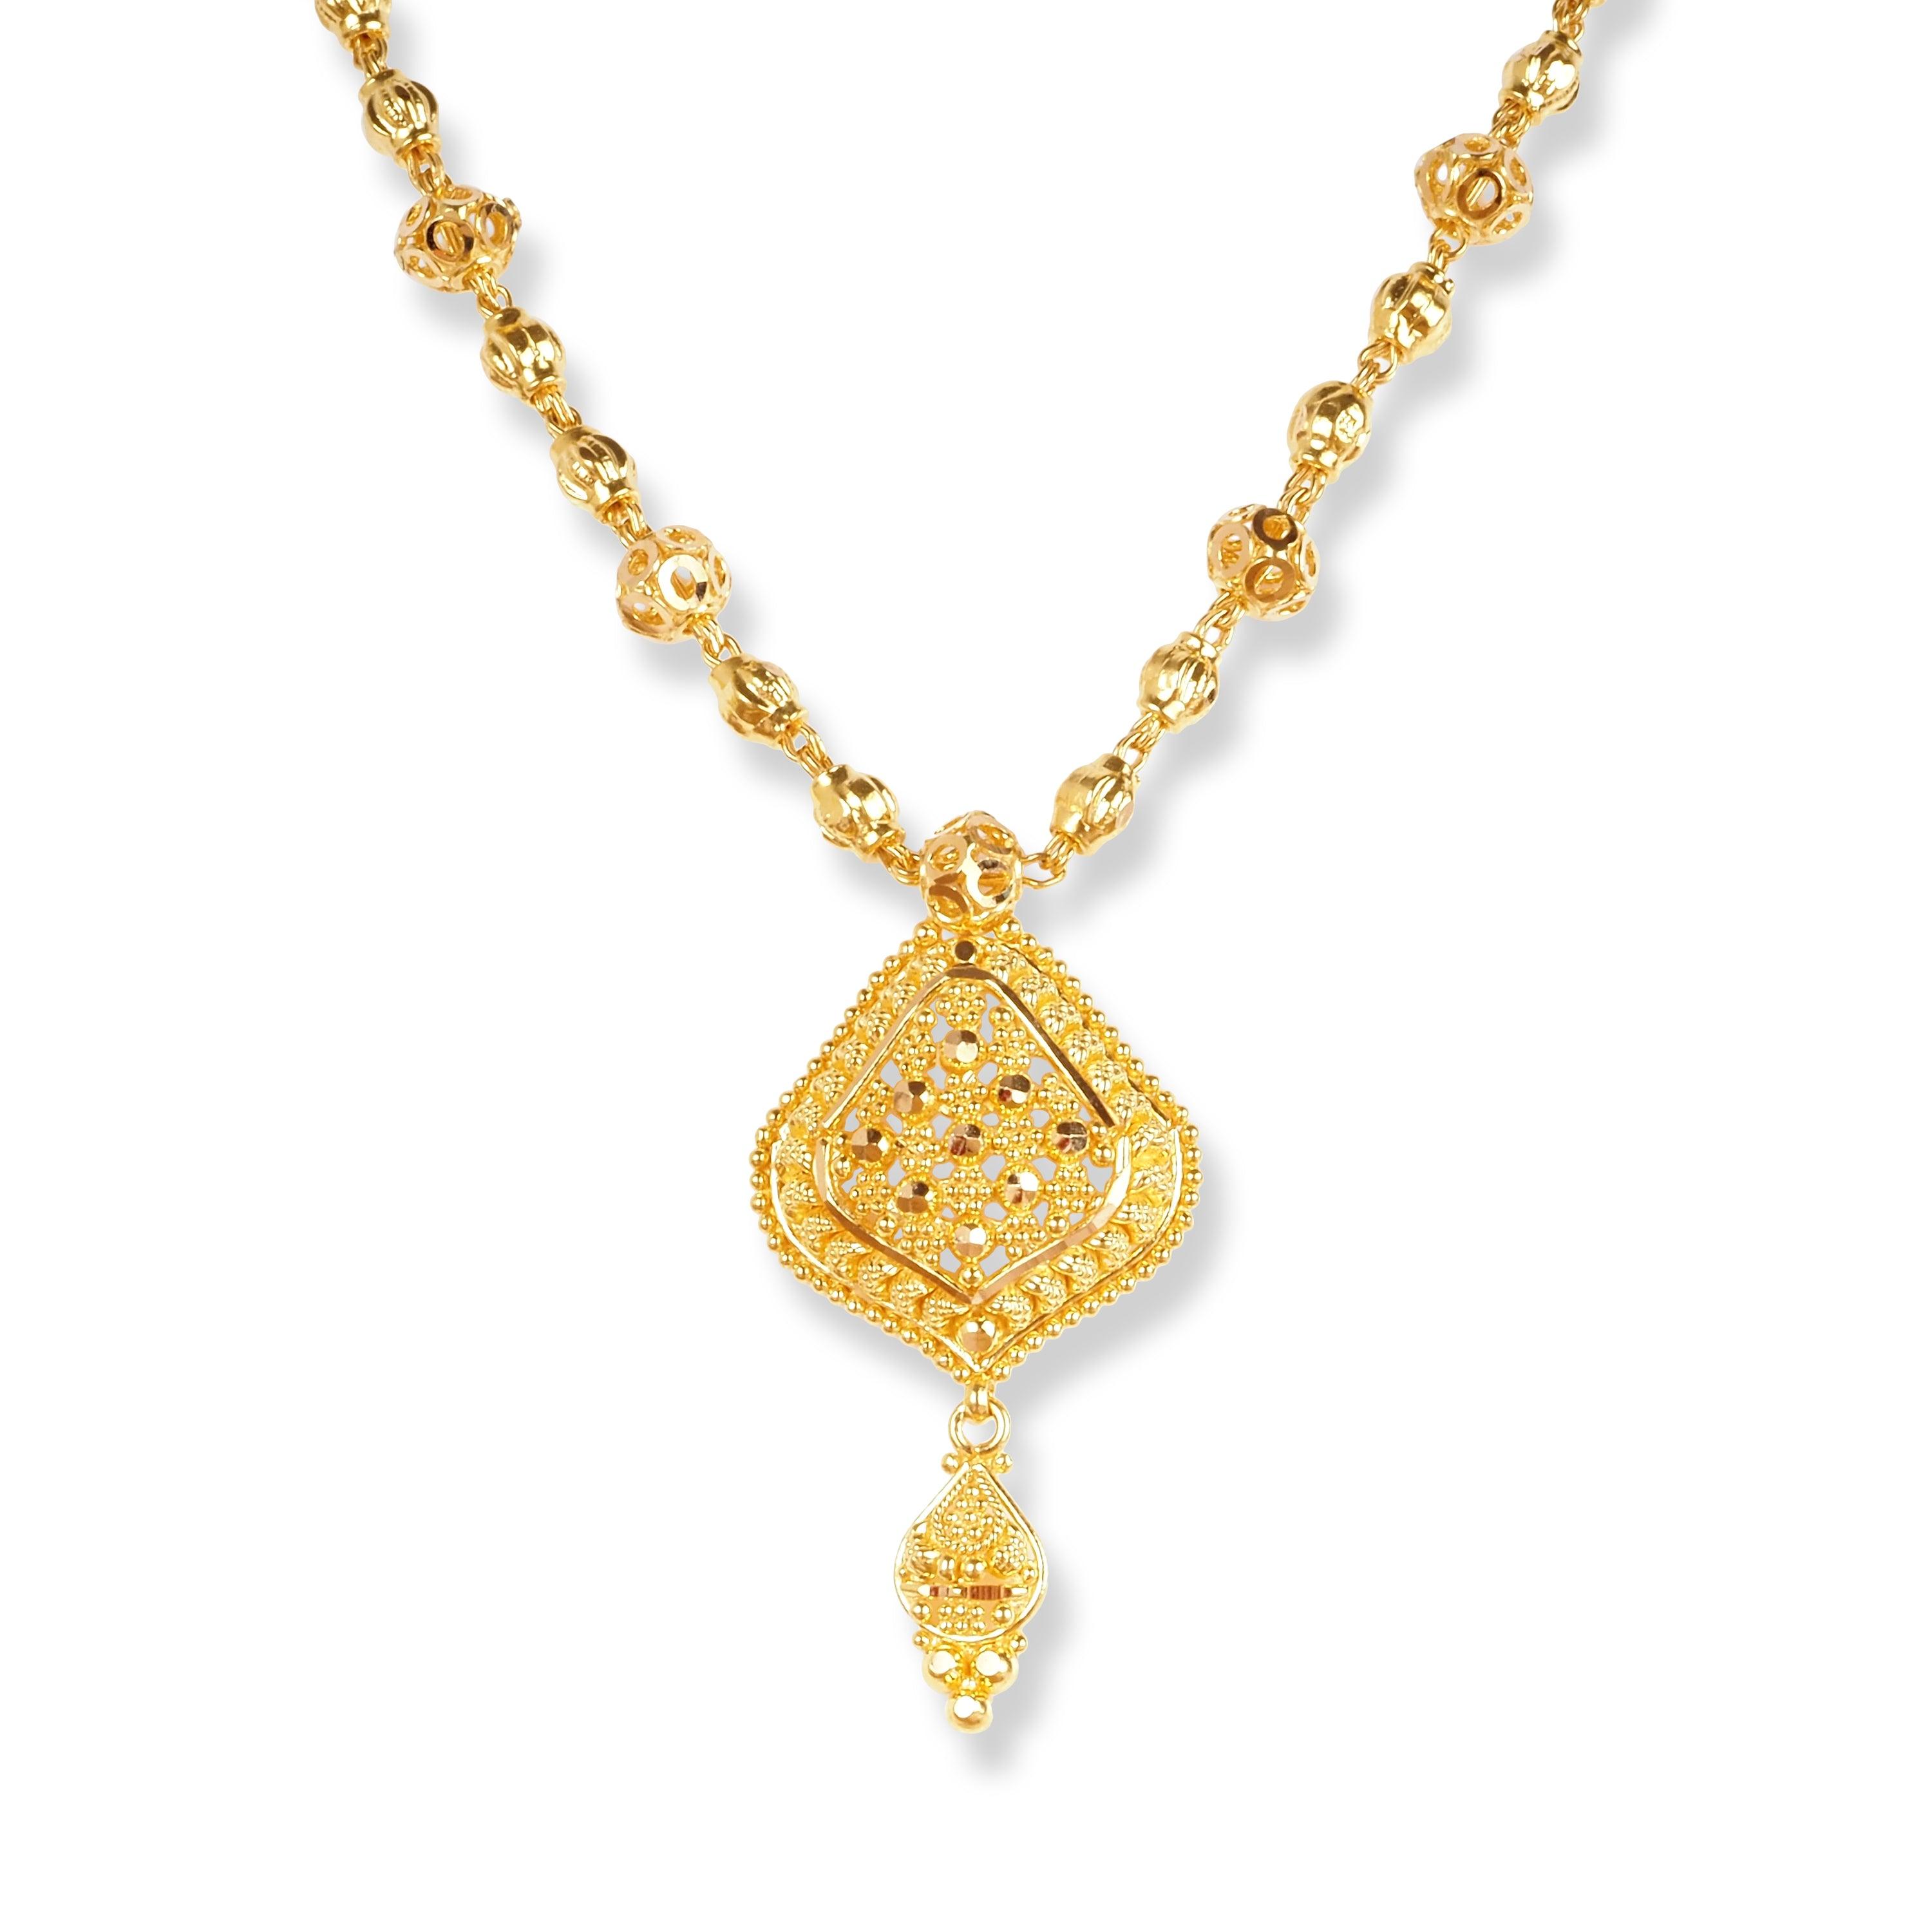 22ct Gold Set with Filigree Work N-7910 - Minar Jewellers